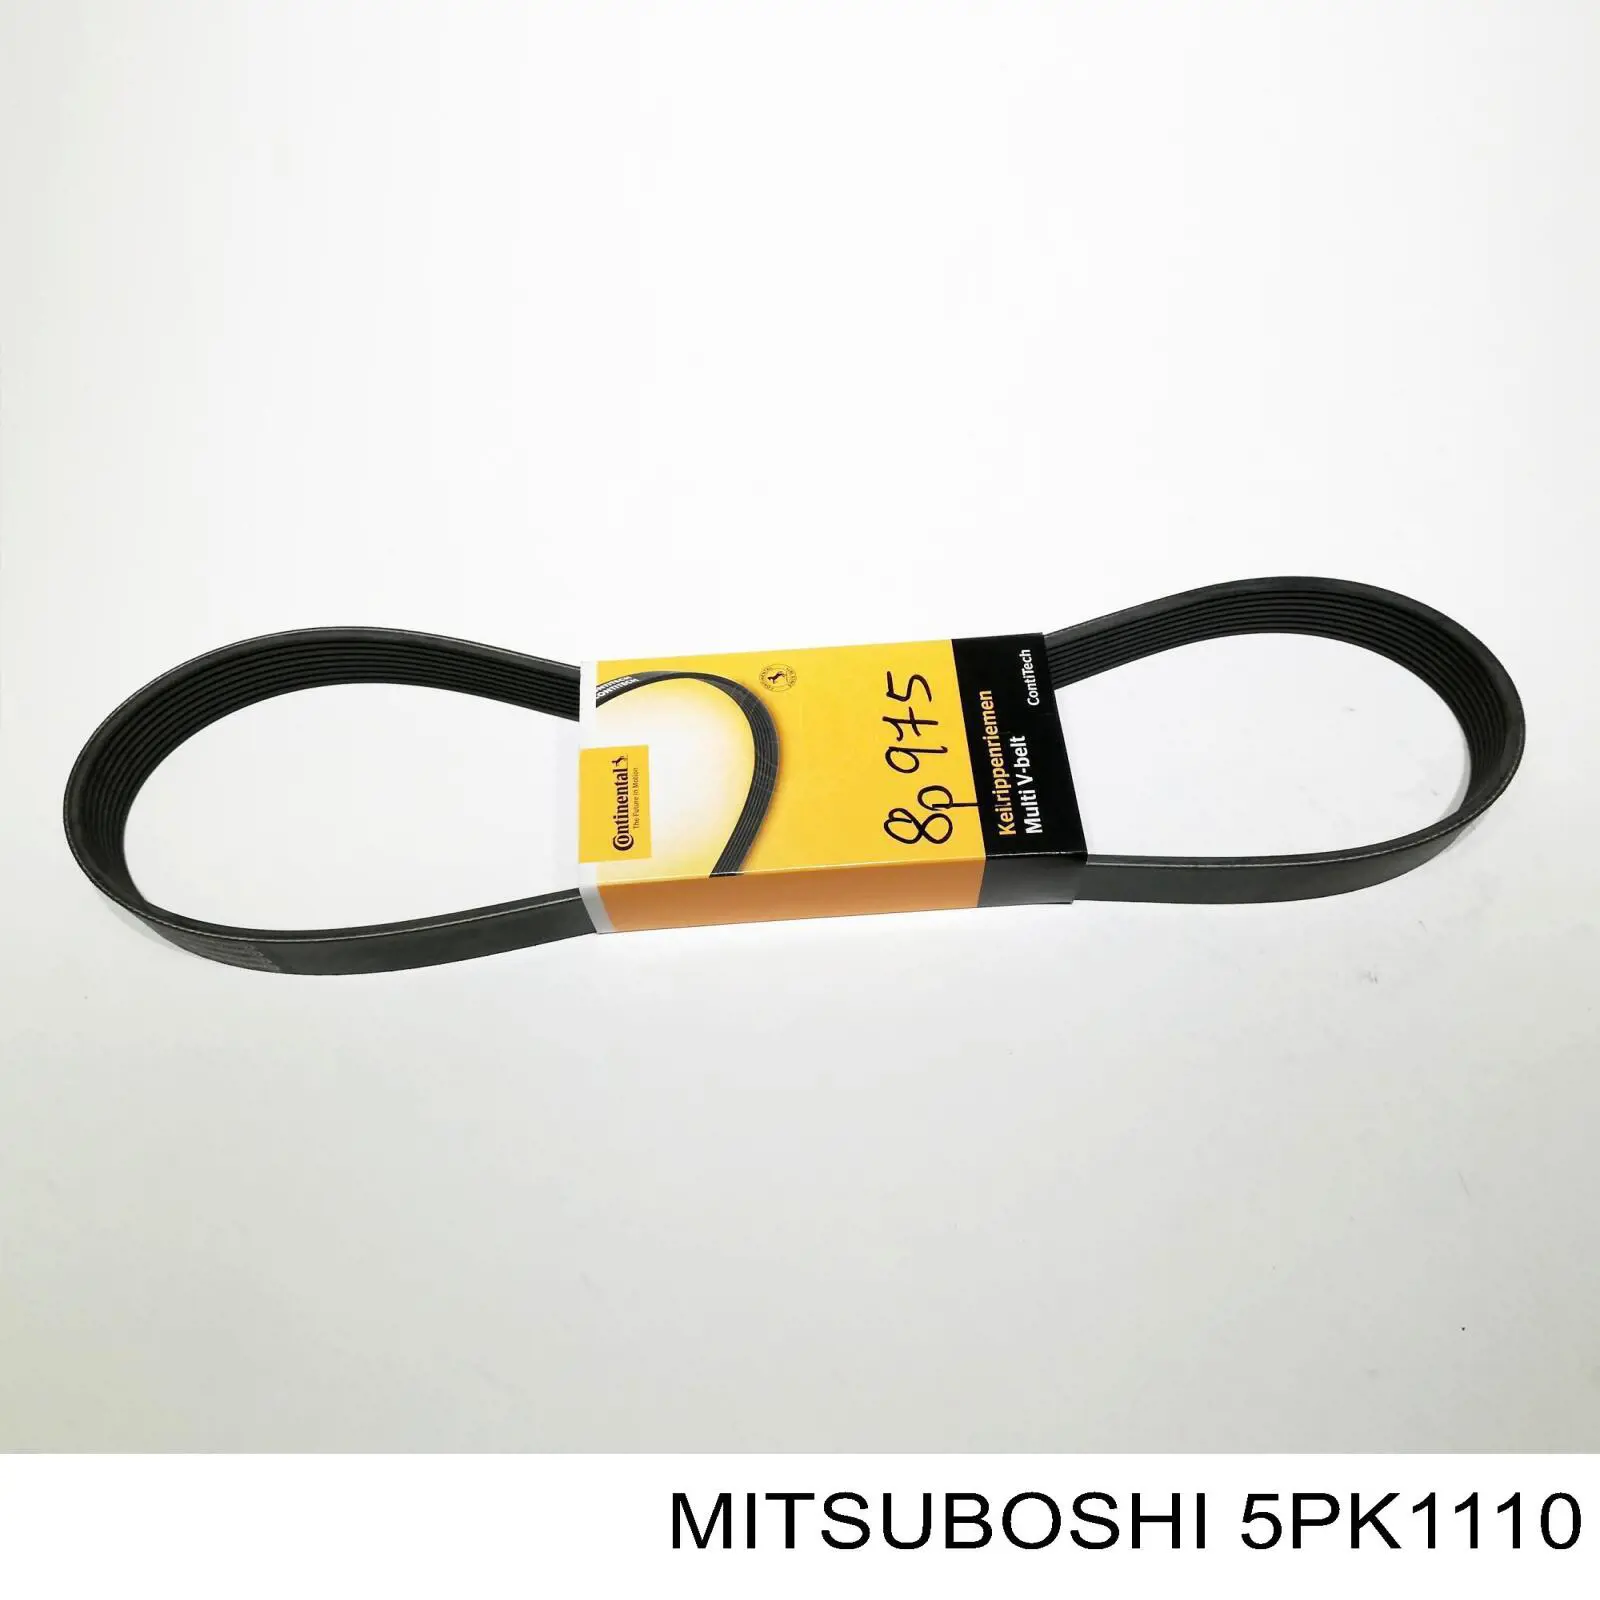 5PK1110 Mitsuboshi correa trapezoidal